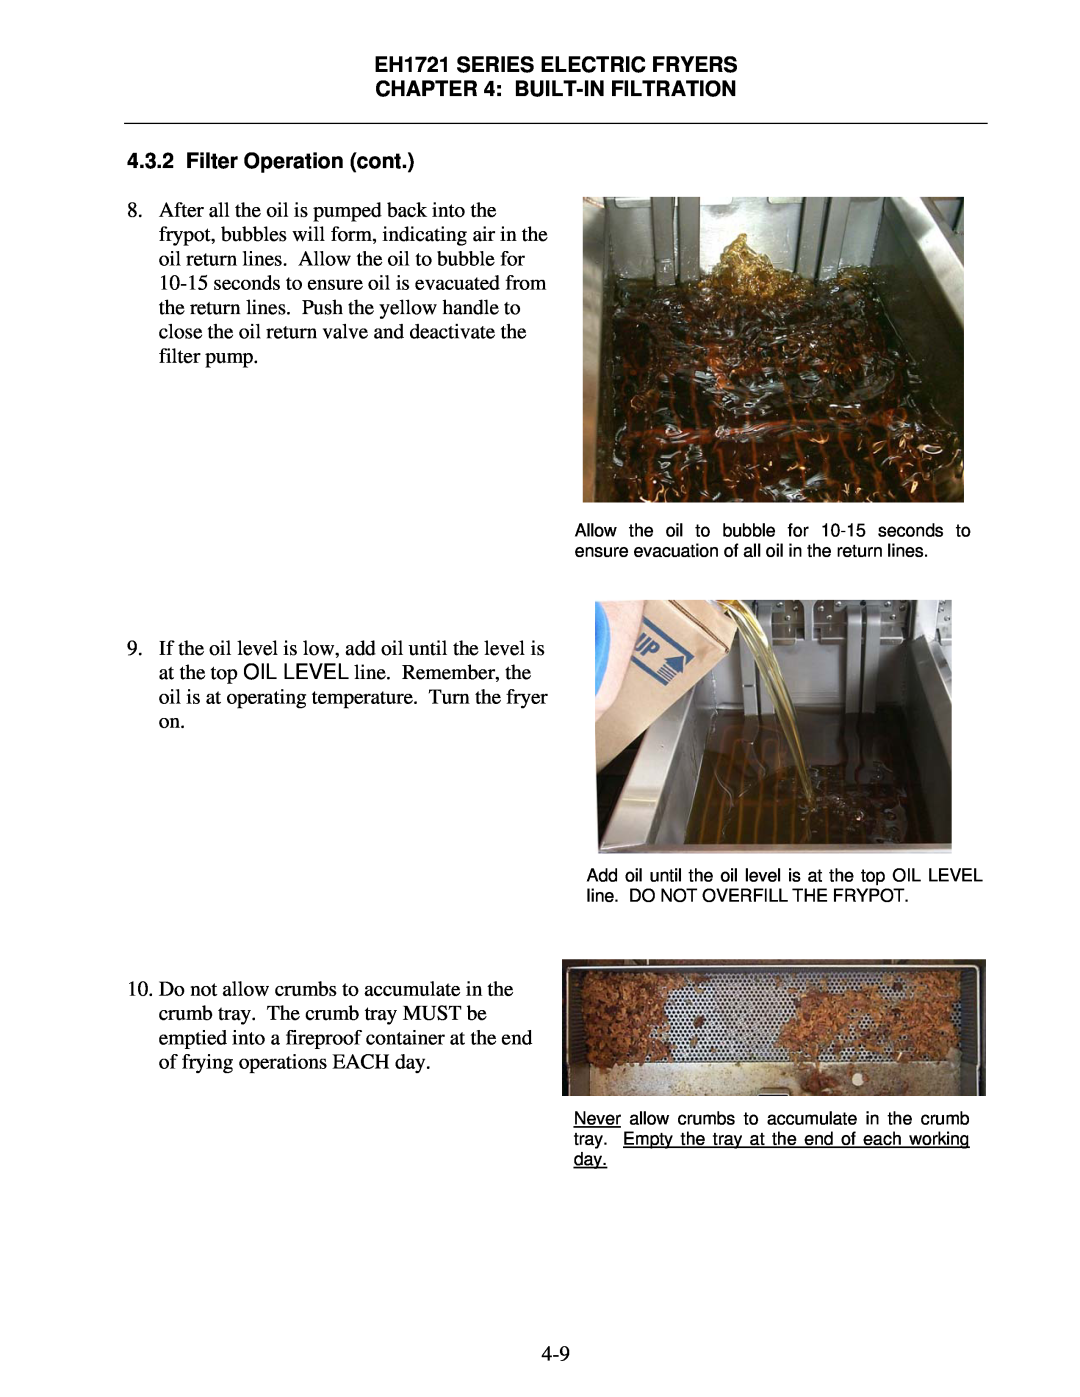 Frymaster EH1721 SERIES operation manual 